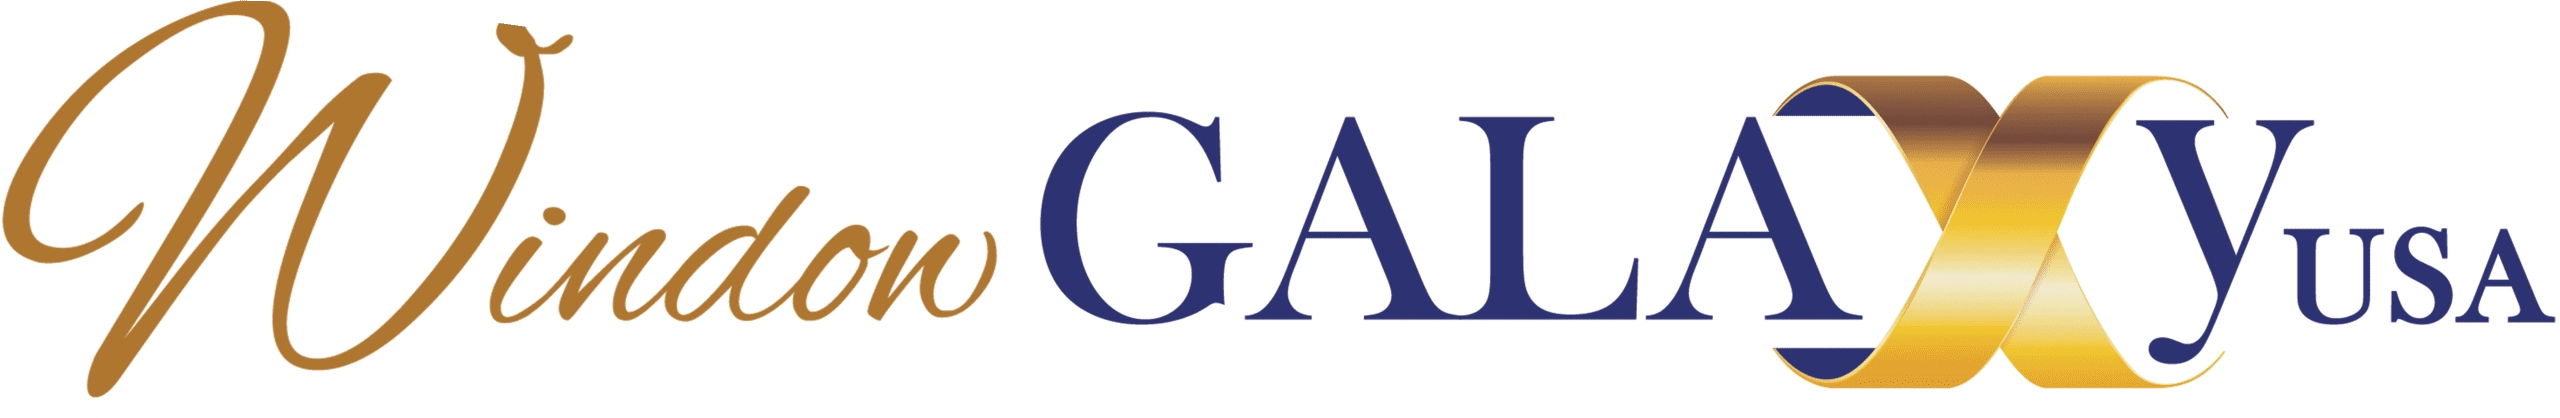 Window Galaxy USA Logo